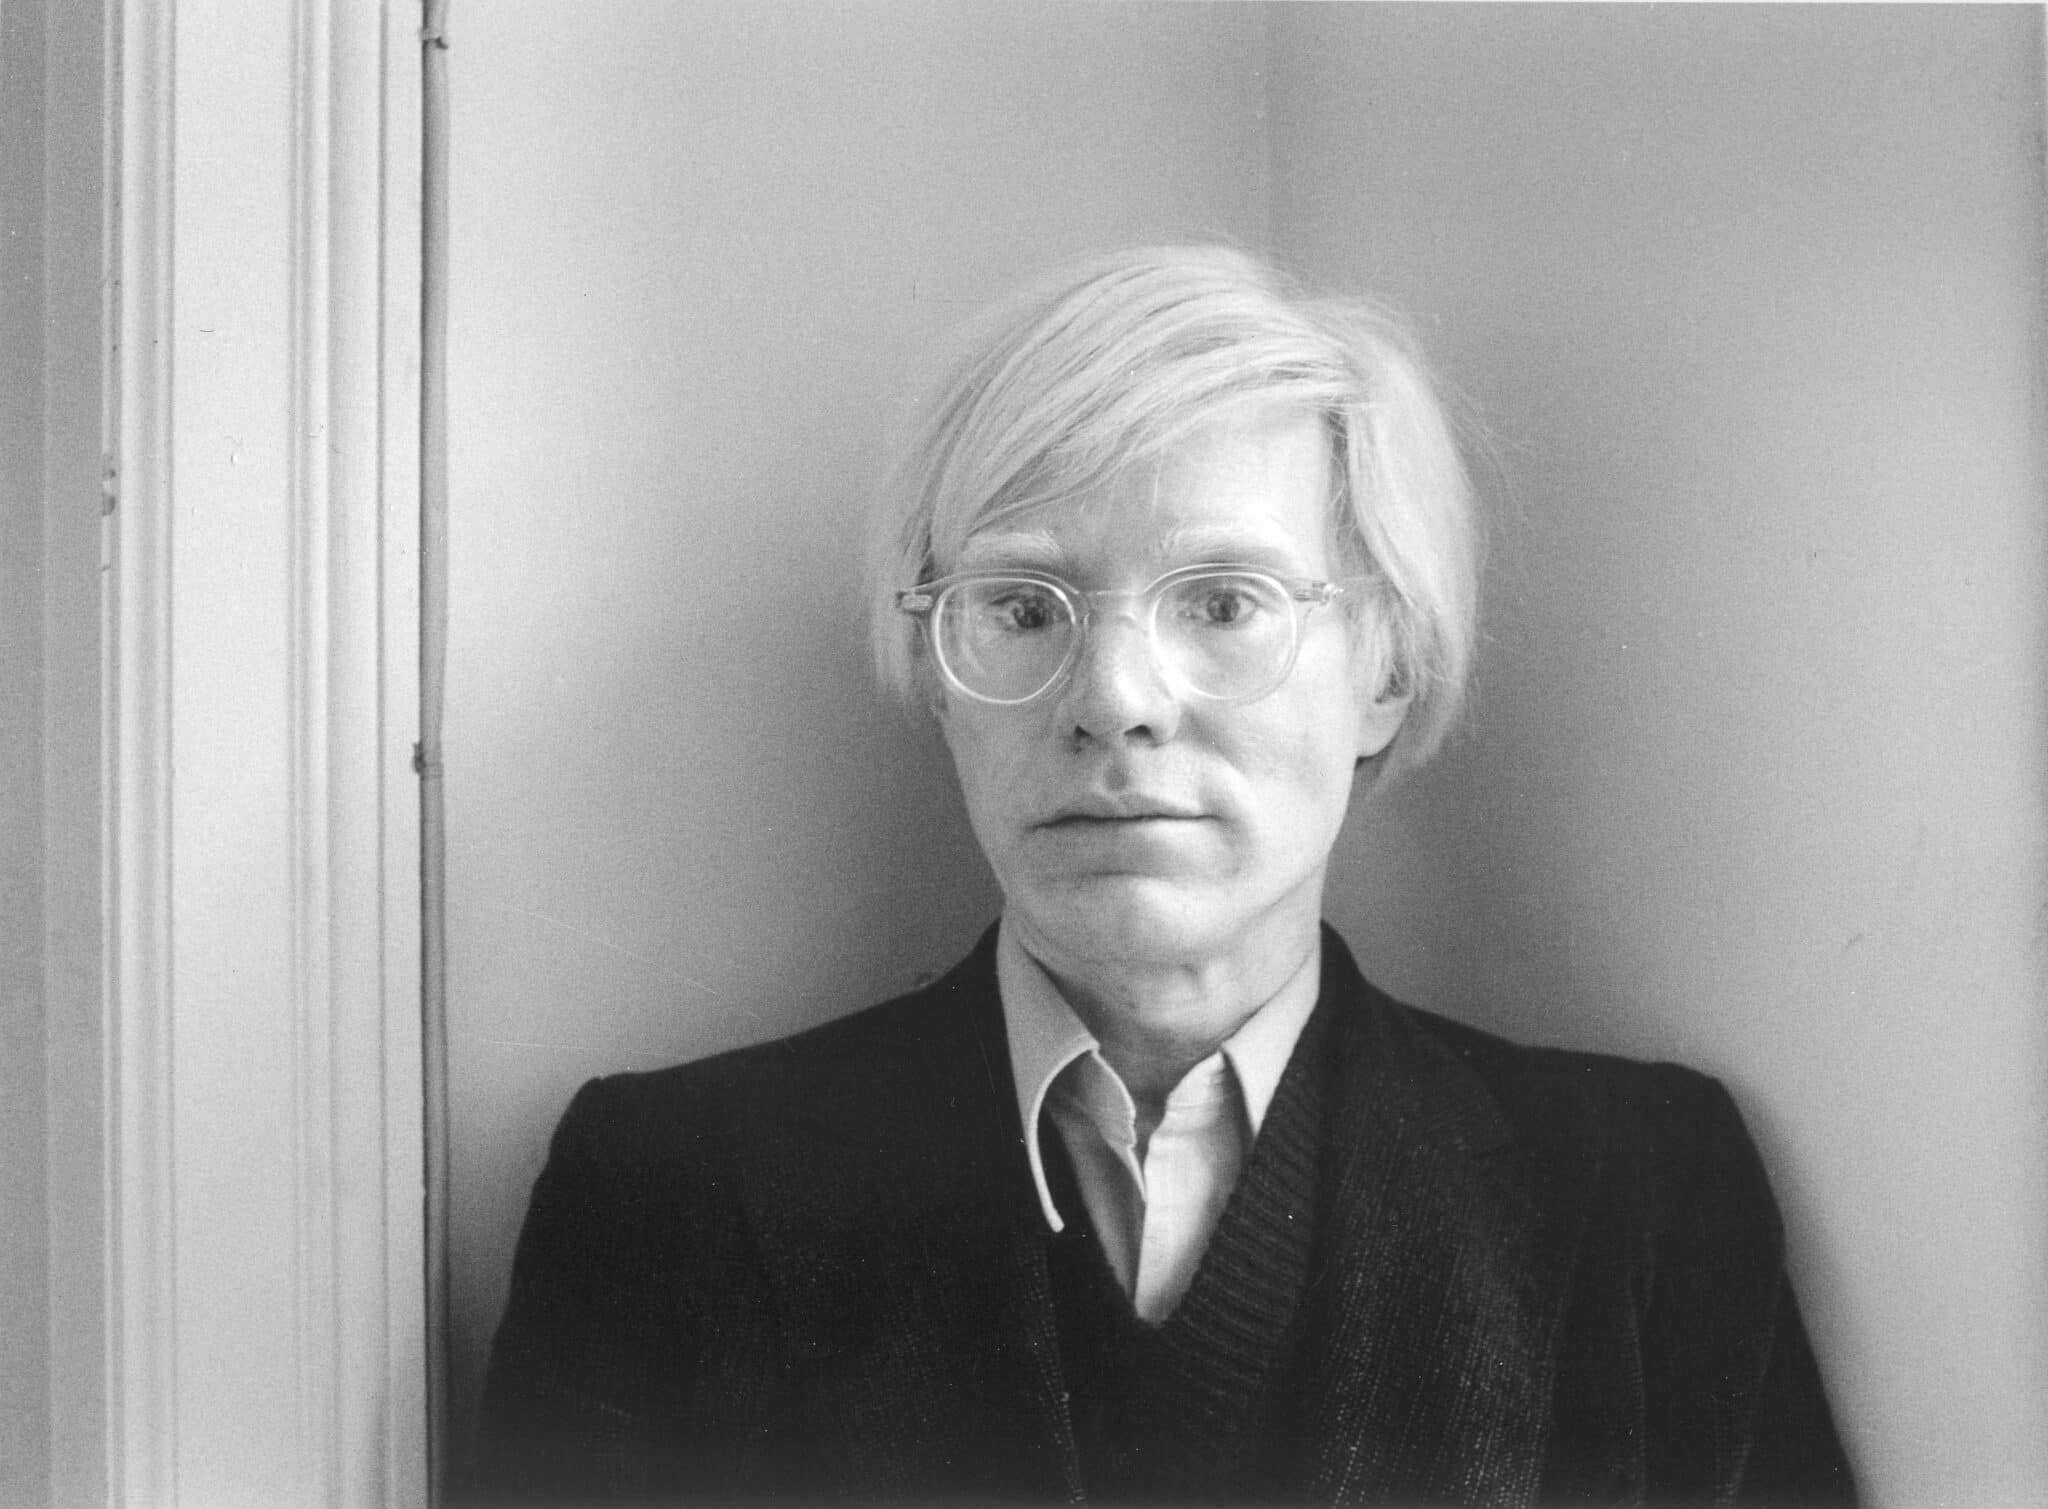 Image: Bernhard Giger, Andy Warhol, New York, 1974